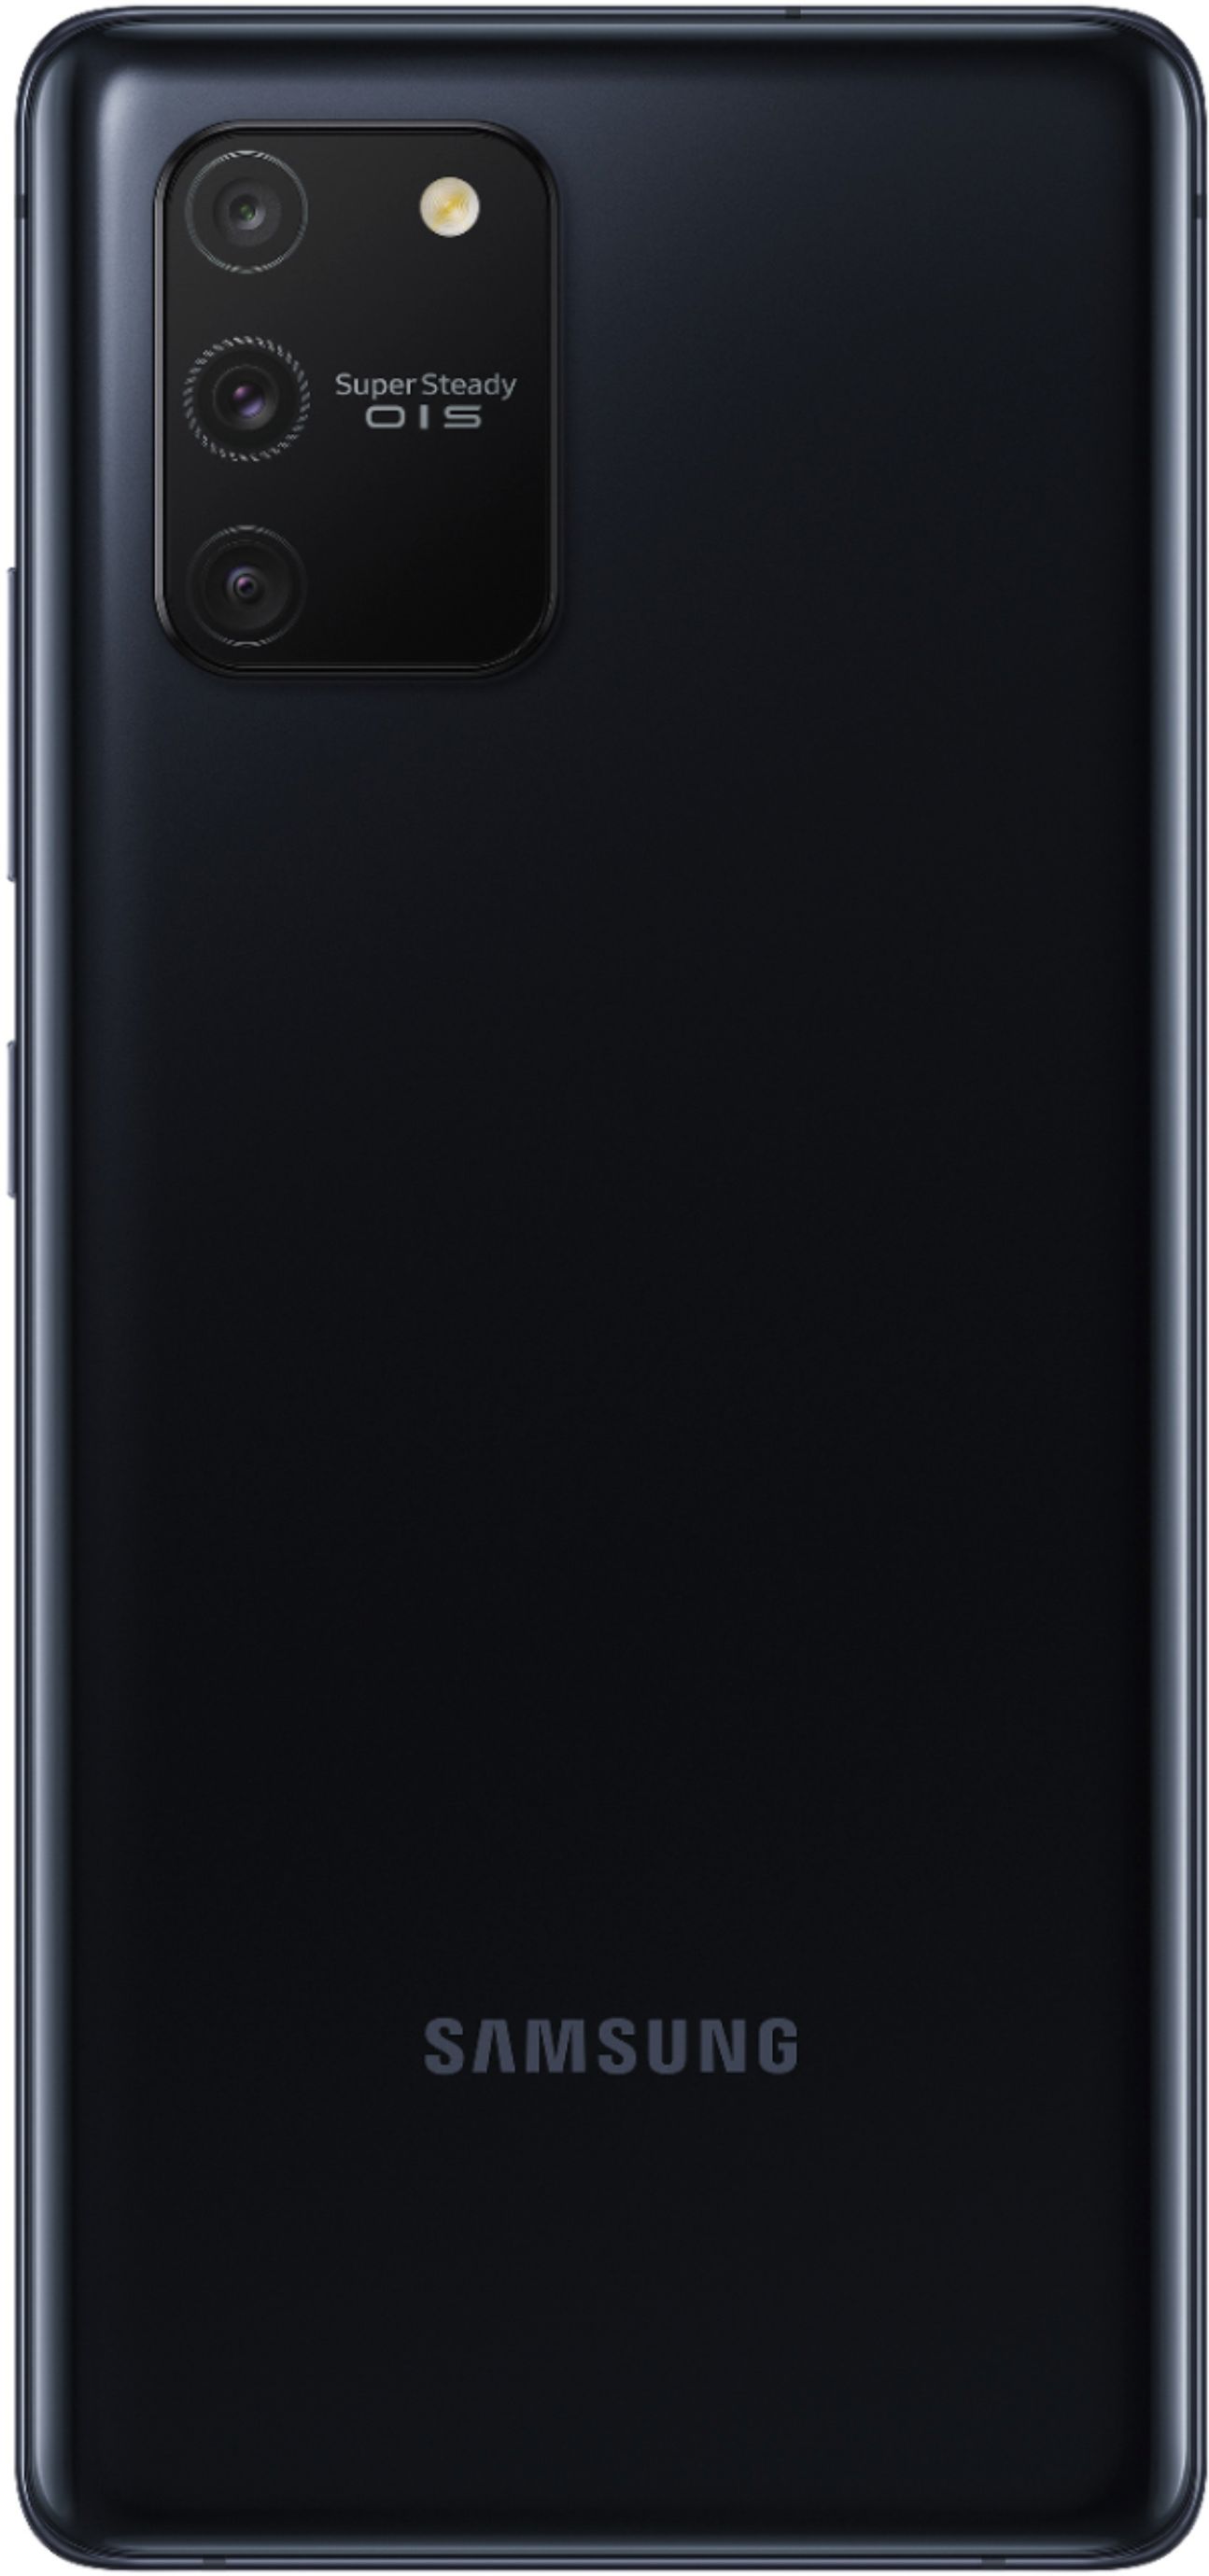 Back View: Samsung Galaxy S20 FE 5G - 5G smartphone - dual-SIM - RAM 6 GB / Internal Memory 256 GB - microSD slot - OLED display - 6.5" - 2400 x 1080 pixels (120 Hz) - 3x rear cameras 12 MP, 12 MP, 8 MP - front camera 32 MP - cloud navy